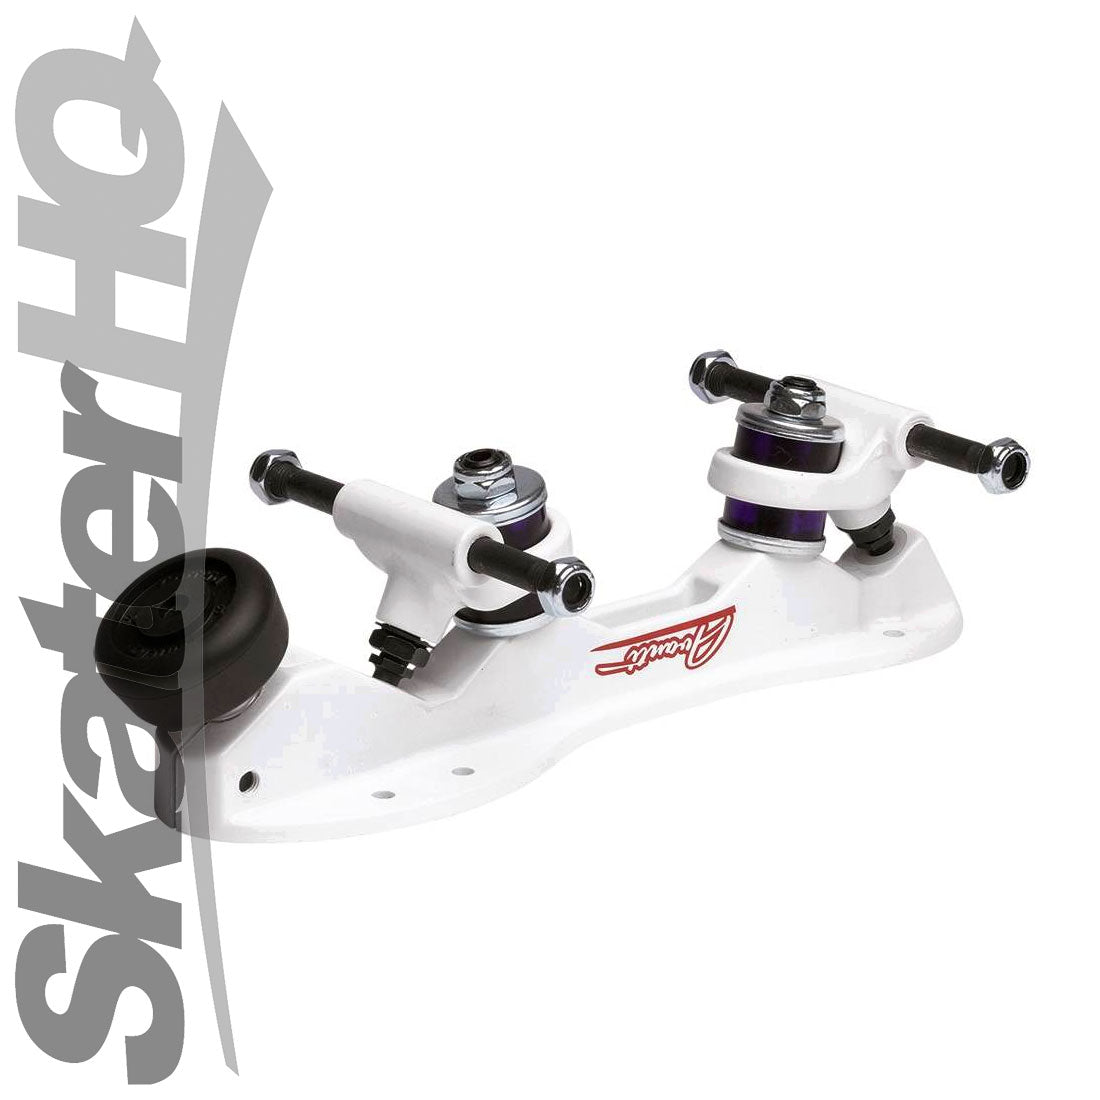 Sure-Grip Avanti Mag Plate - Size 3 Roller Skate Plates